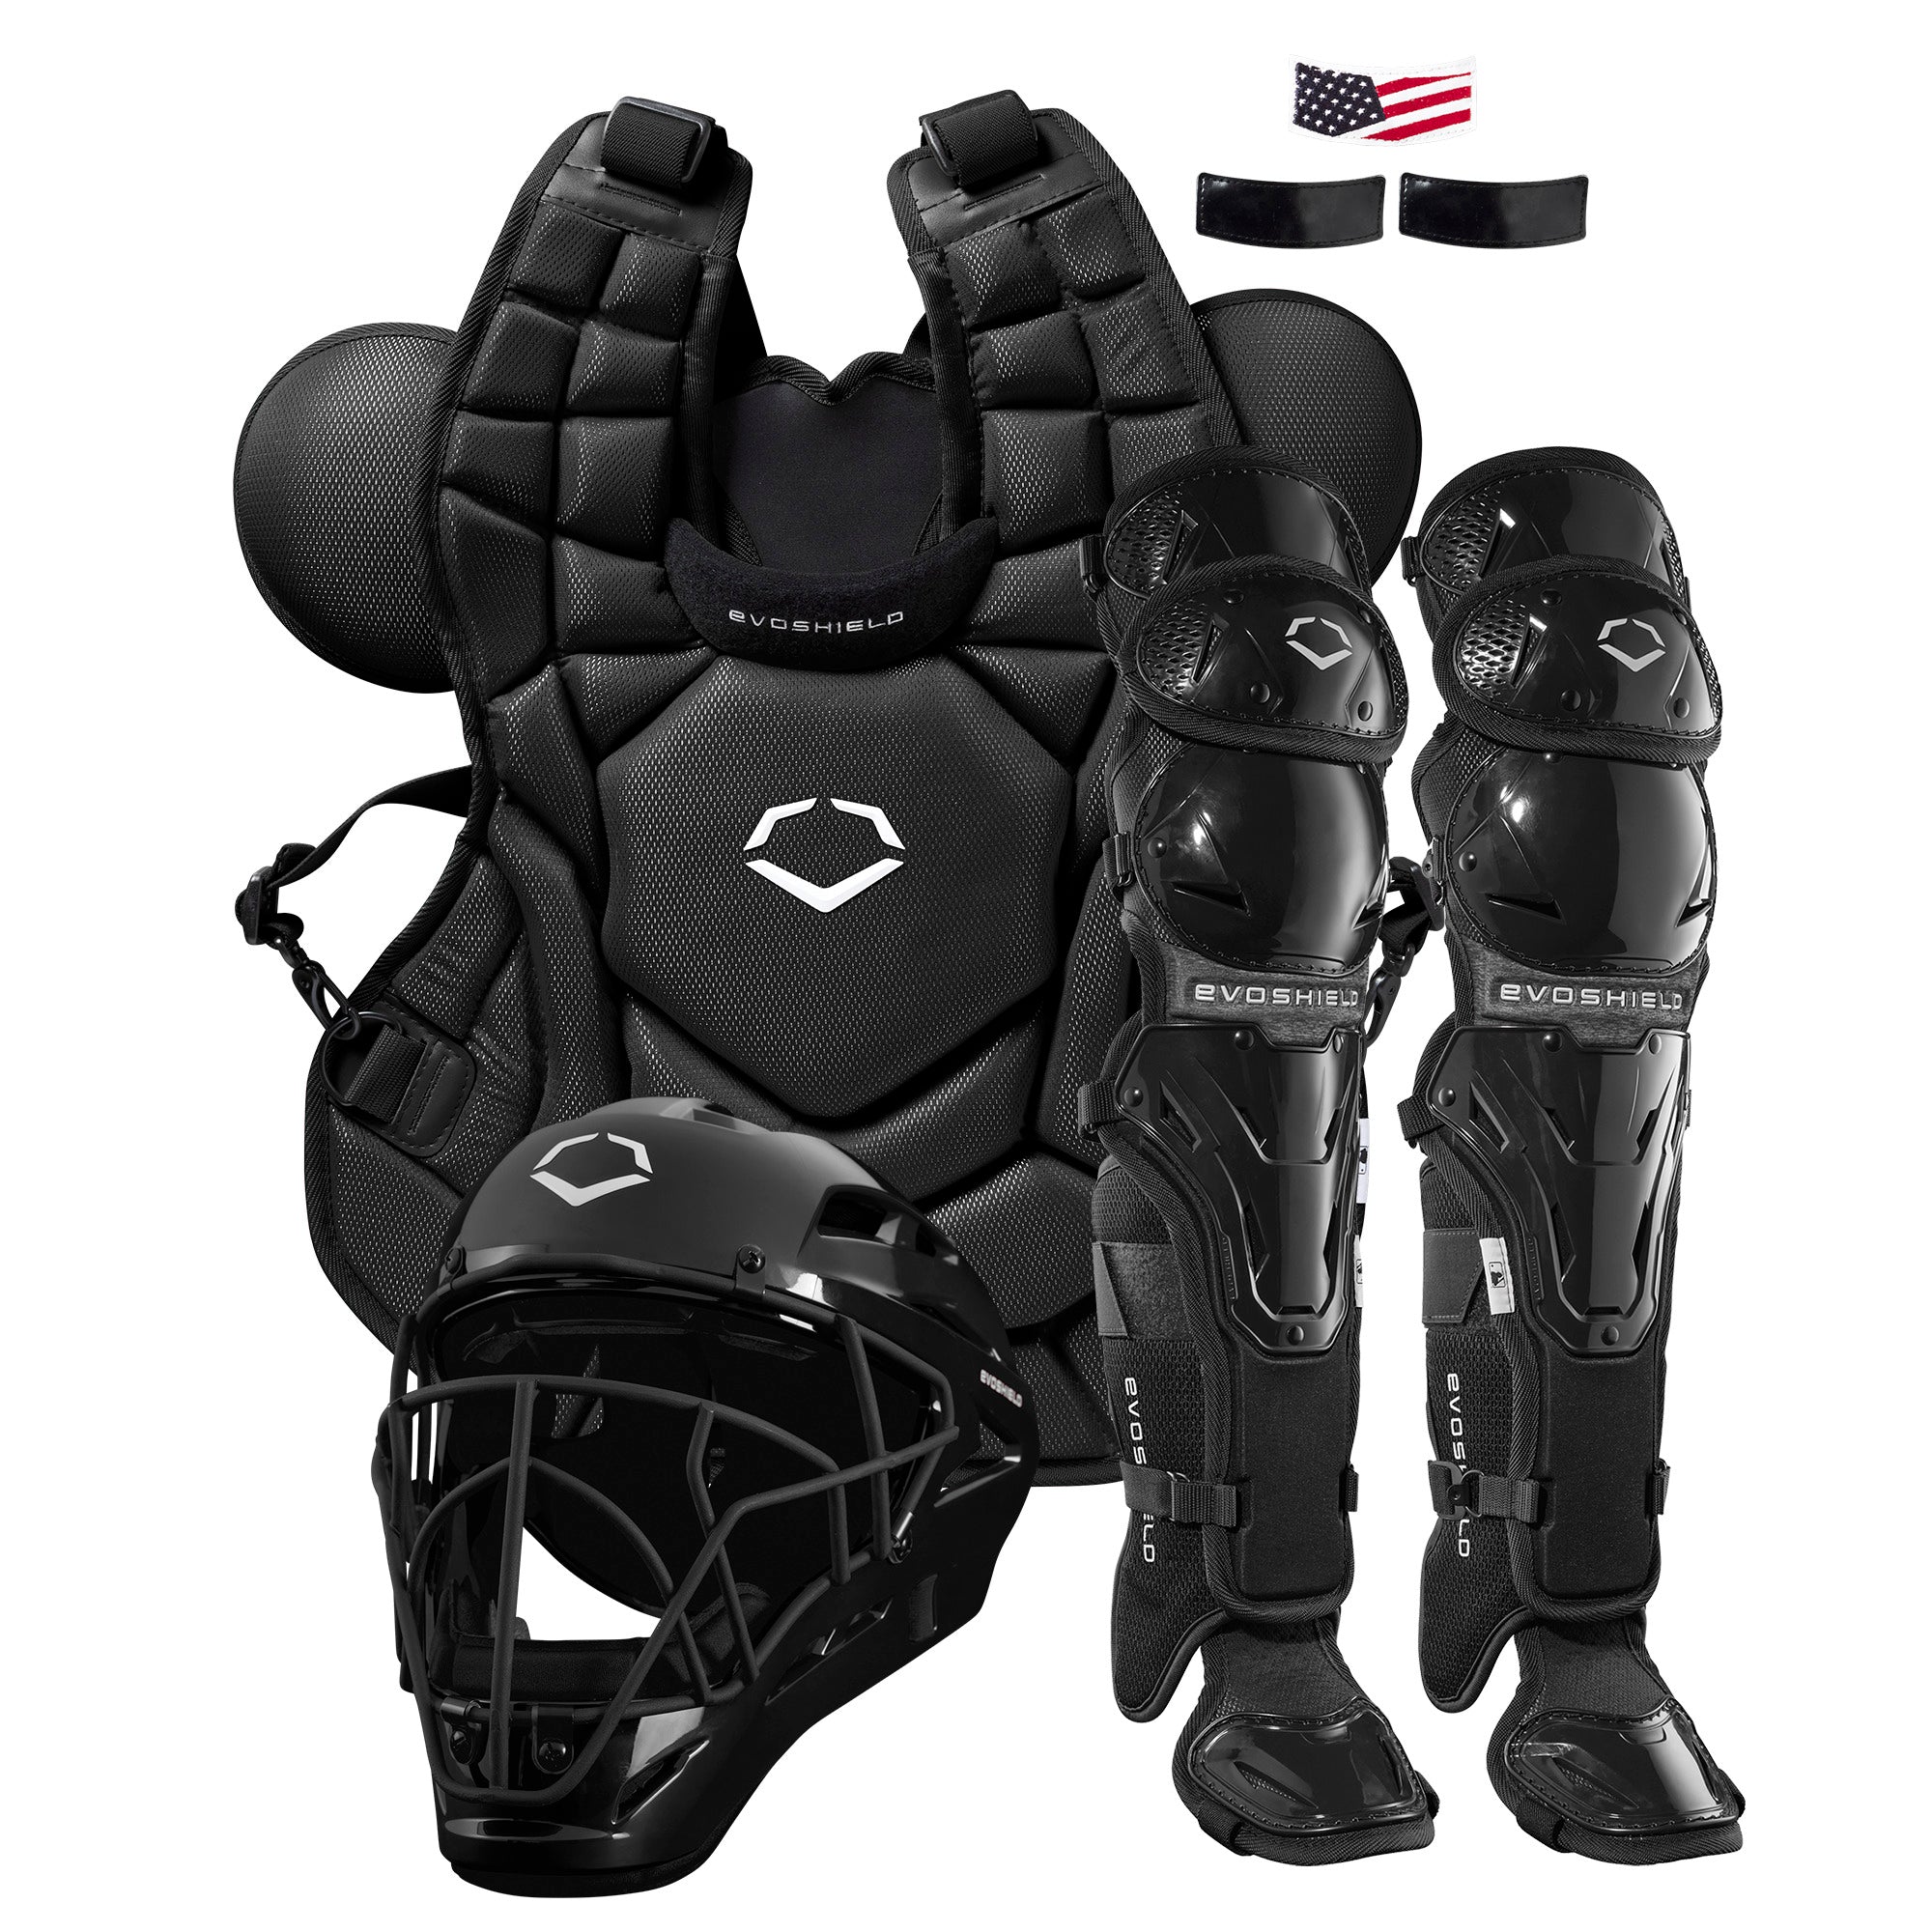 Evoshield G2S Baseball Catchers Gear Kit Adult